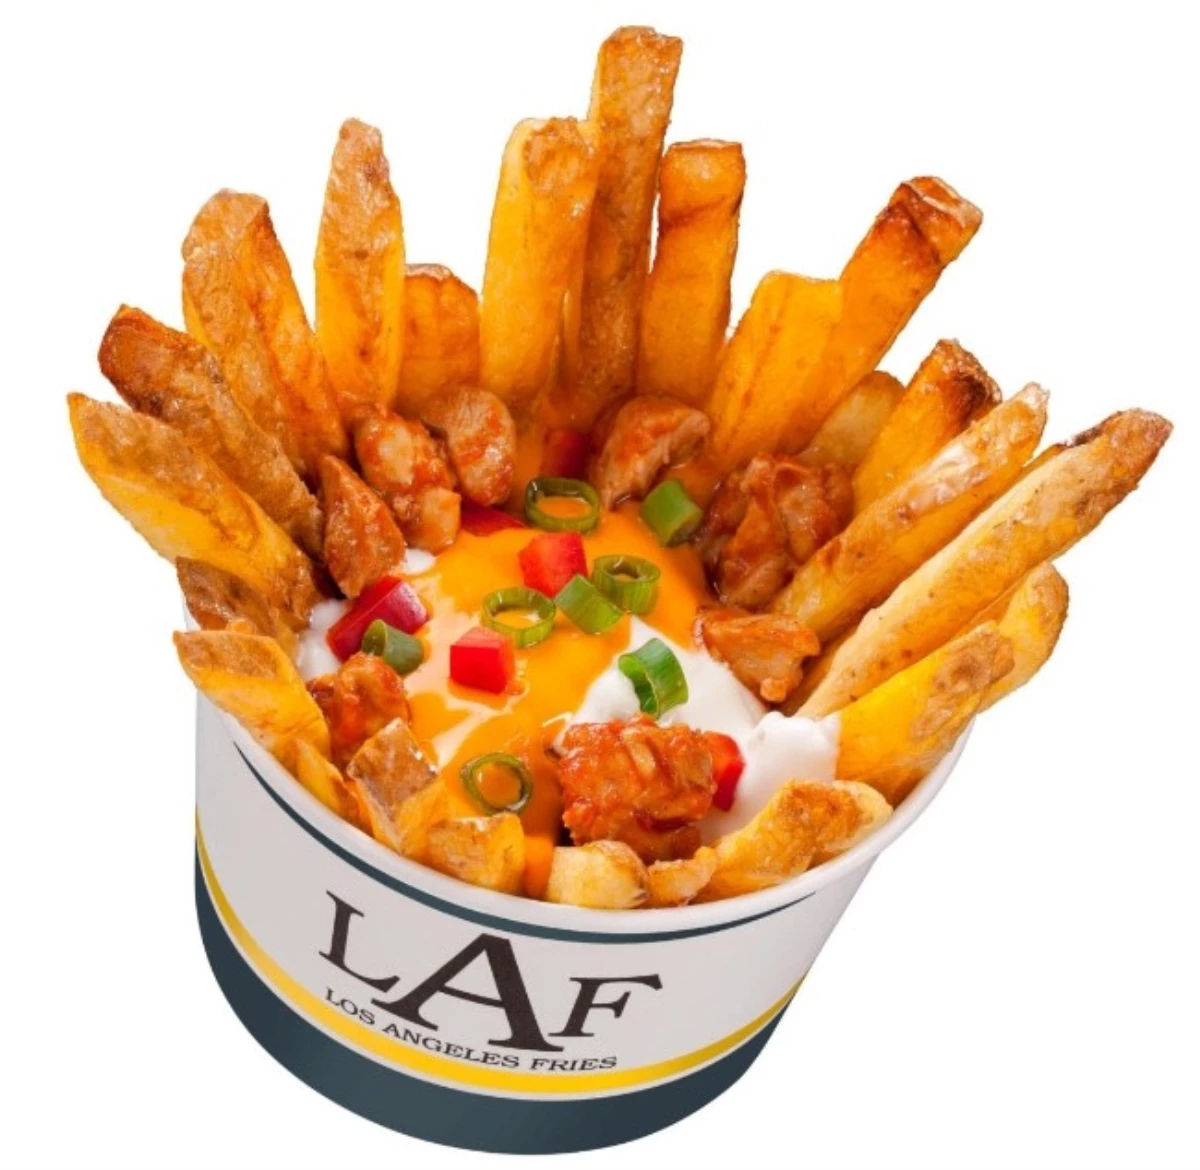 Çocukları Fastfood\'tan Vazgeçmeyince Los Angeles Fries\'i (Laf) Kurdular